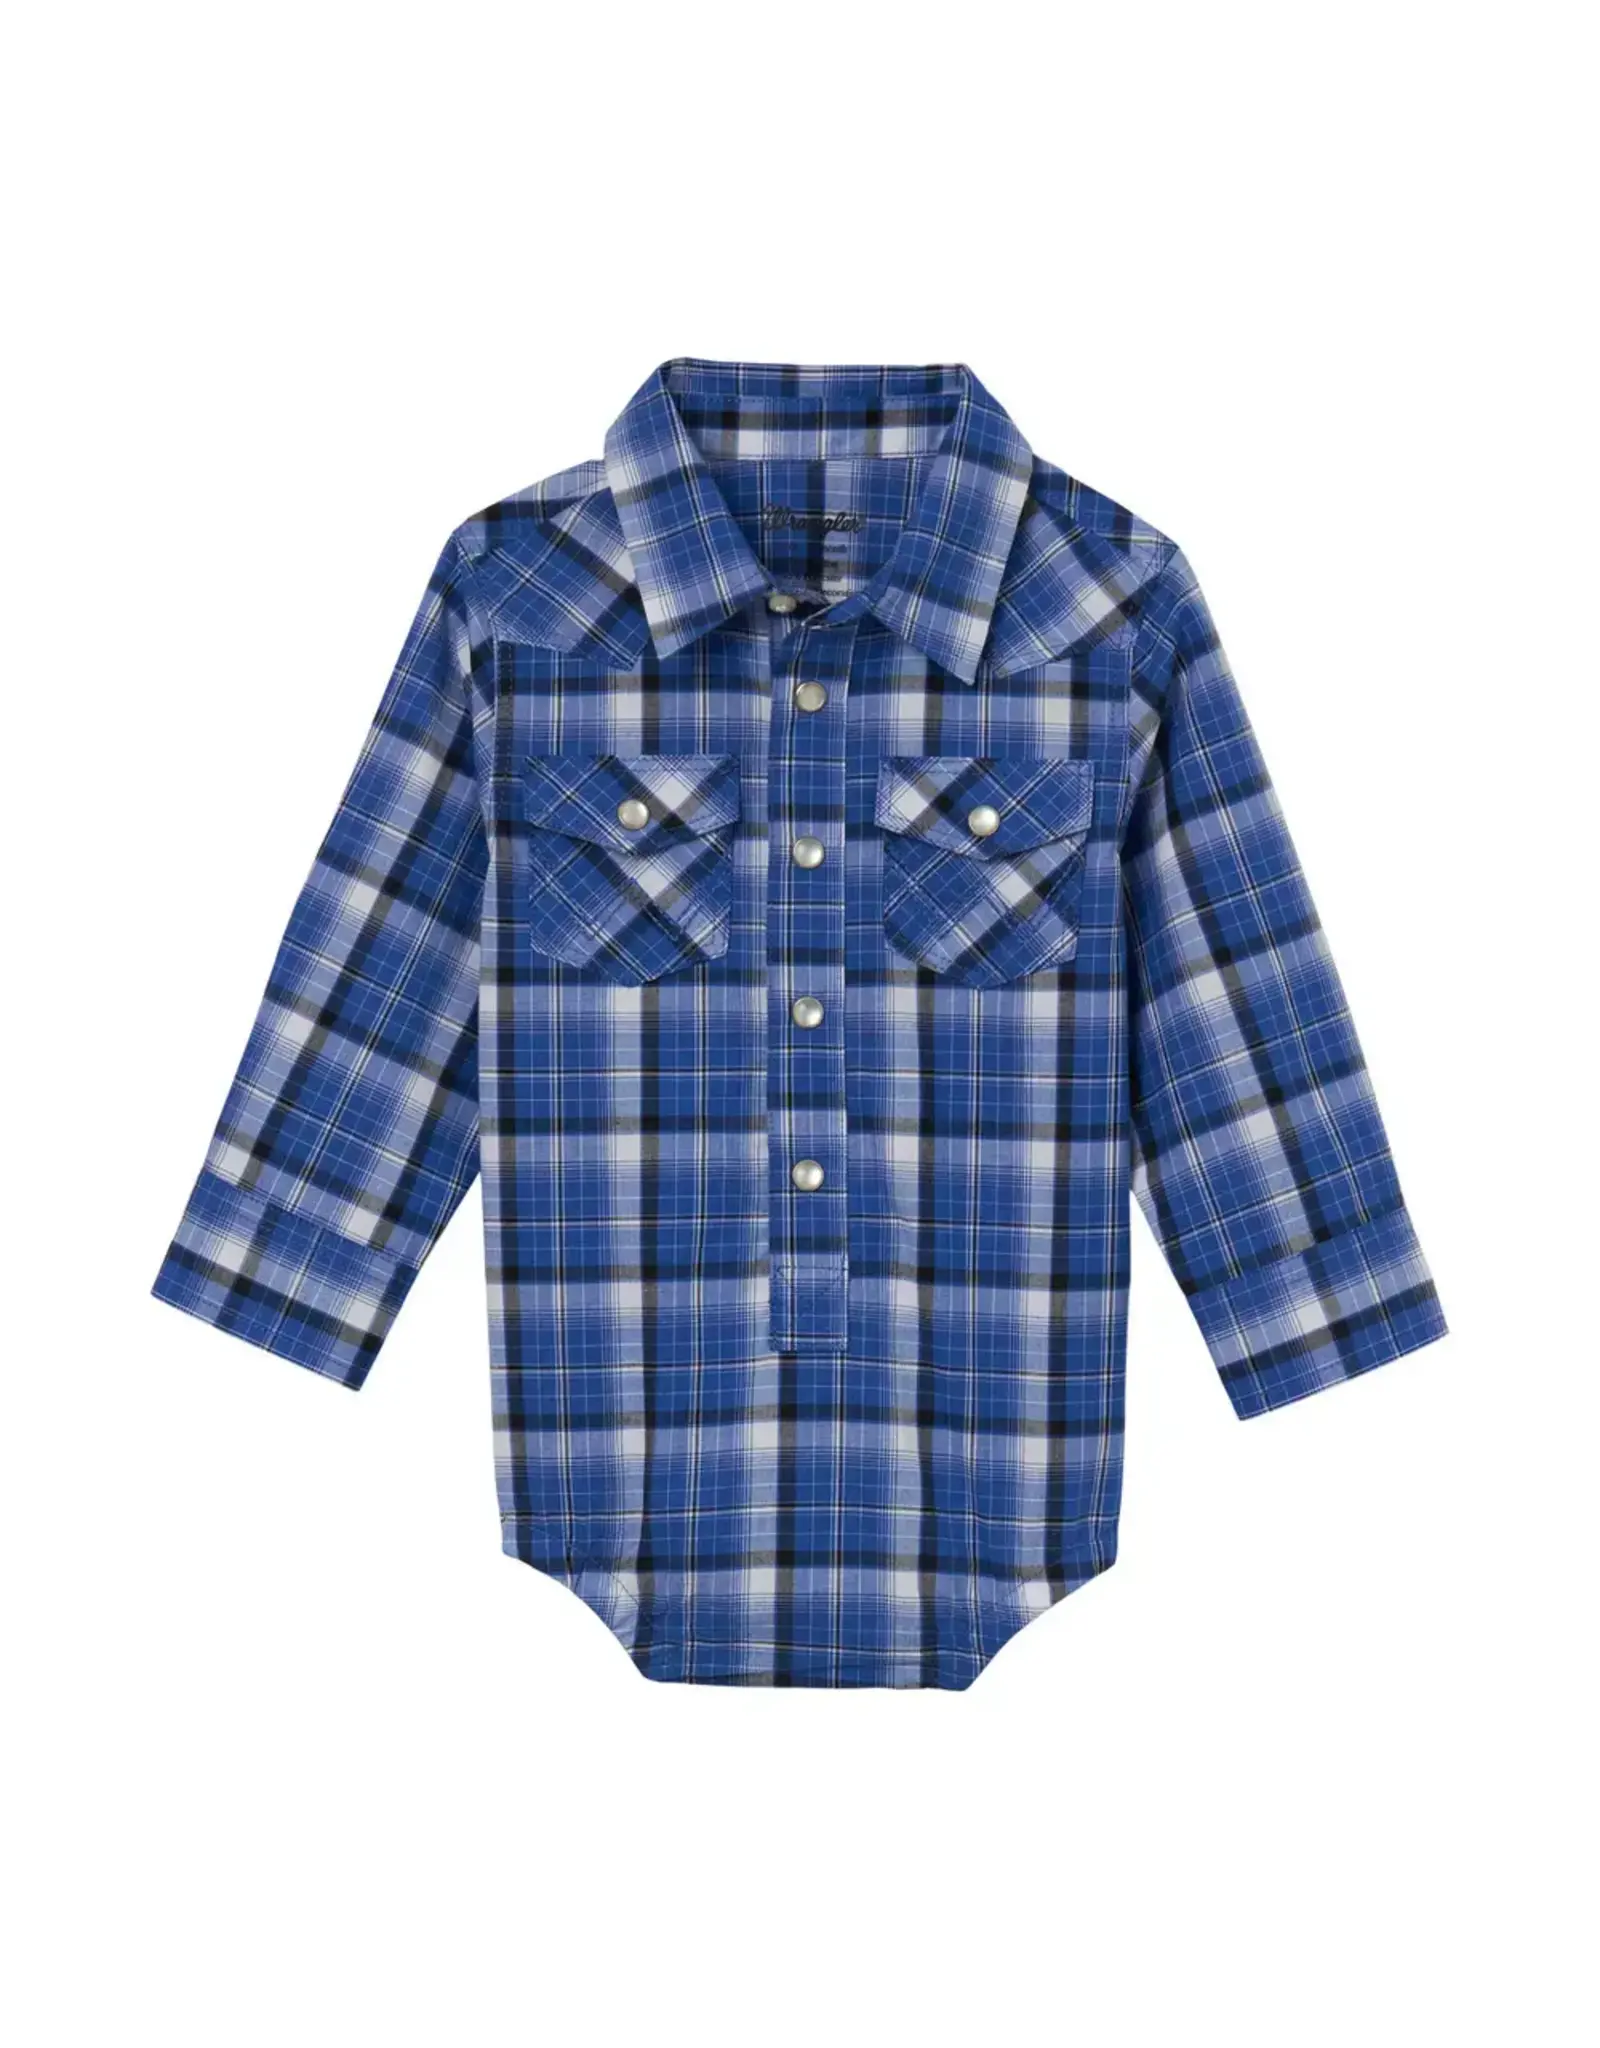 Wrangler Long Sleeve 112344687 Baby Boy Multi Plaid Shirt